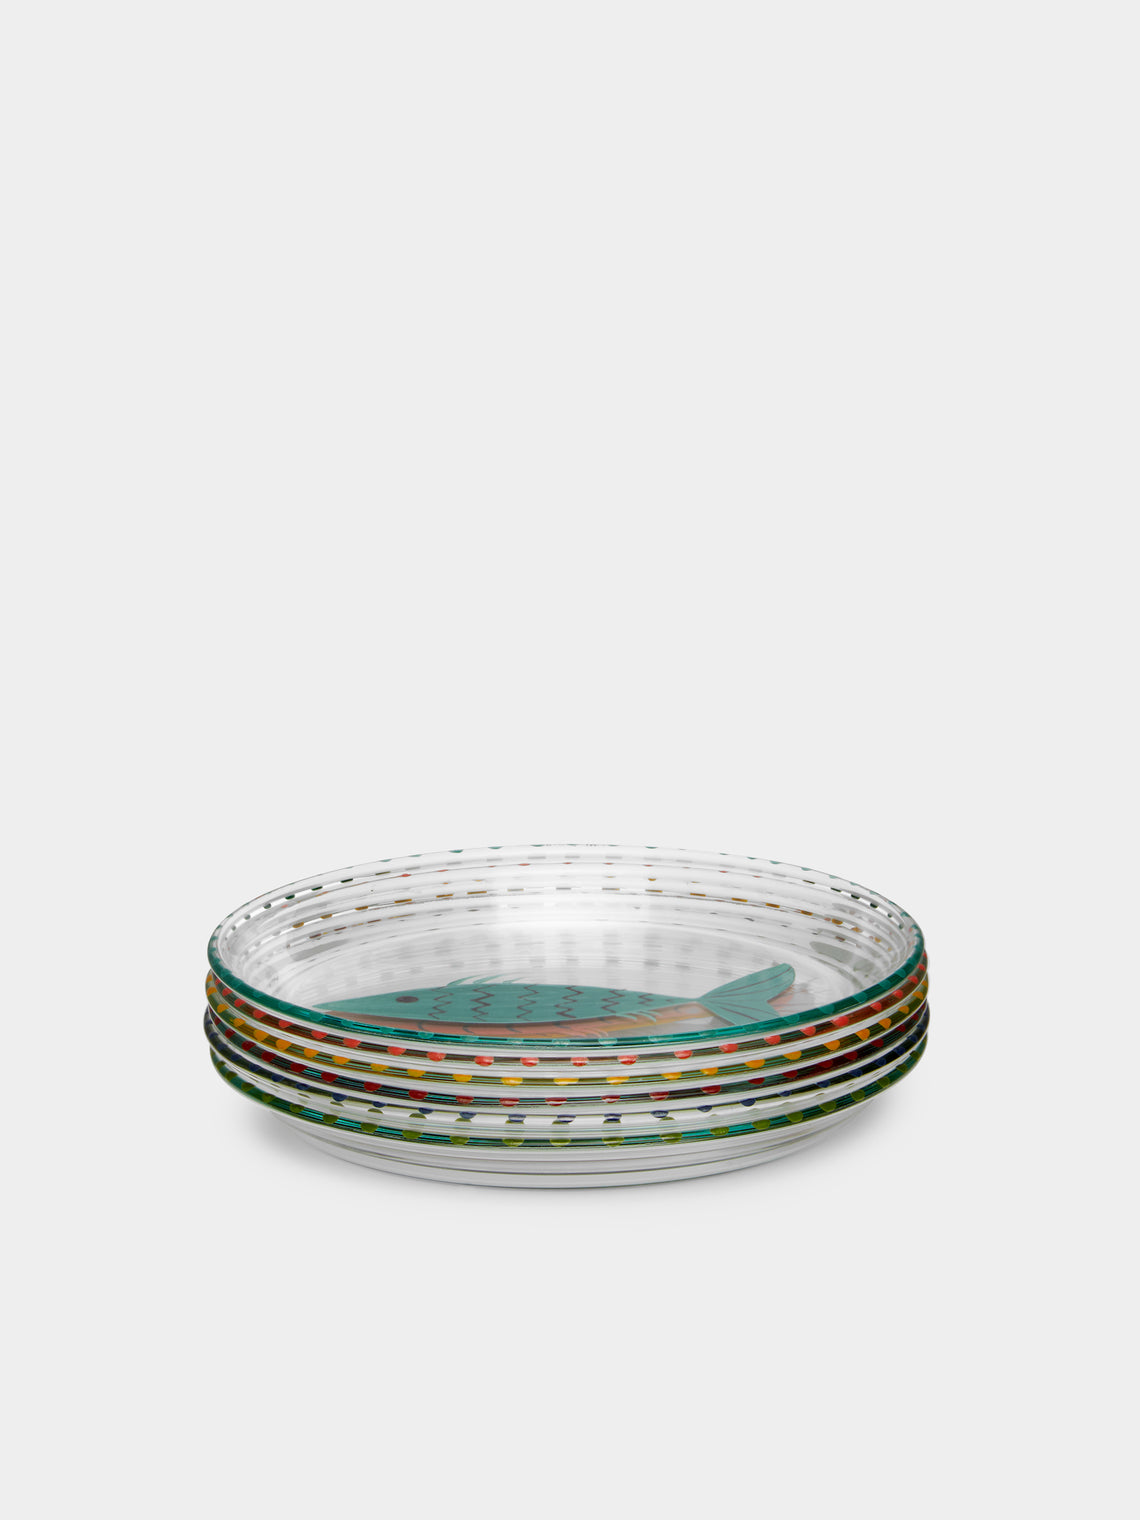 Los Vasos de Agua Clara - Fish Hand-Painted Glass Bread Plates (Set of 6) -  - ABASK